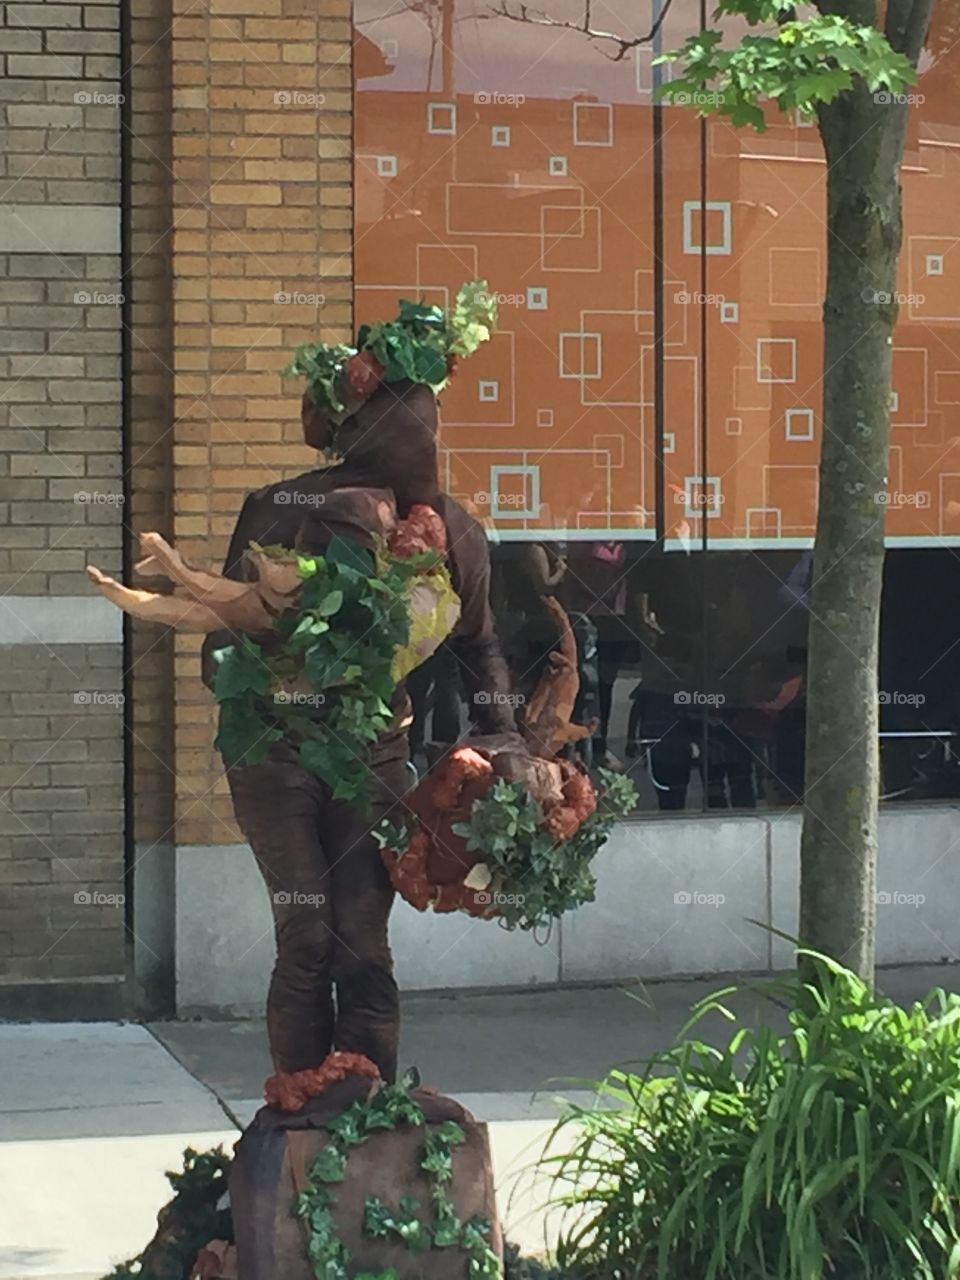 Guy dress up as a Tree....yeah I dunno